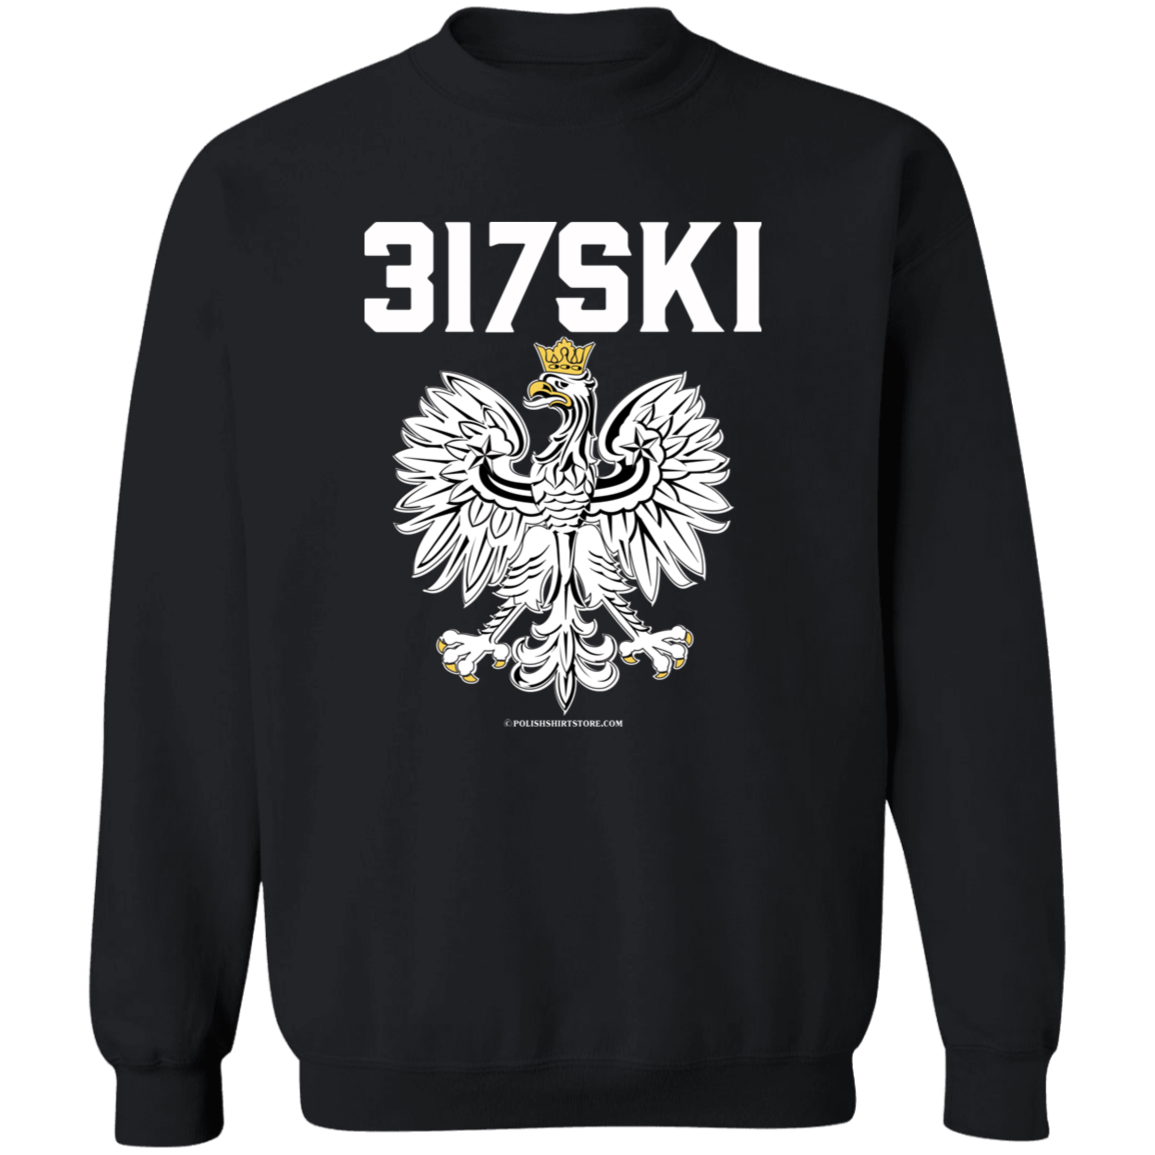 317SKI Apparel CustomCat G180 Crewneck Pullover Sweatshirt Black S